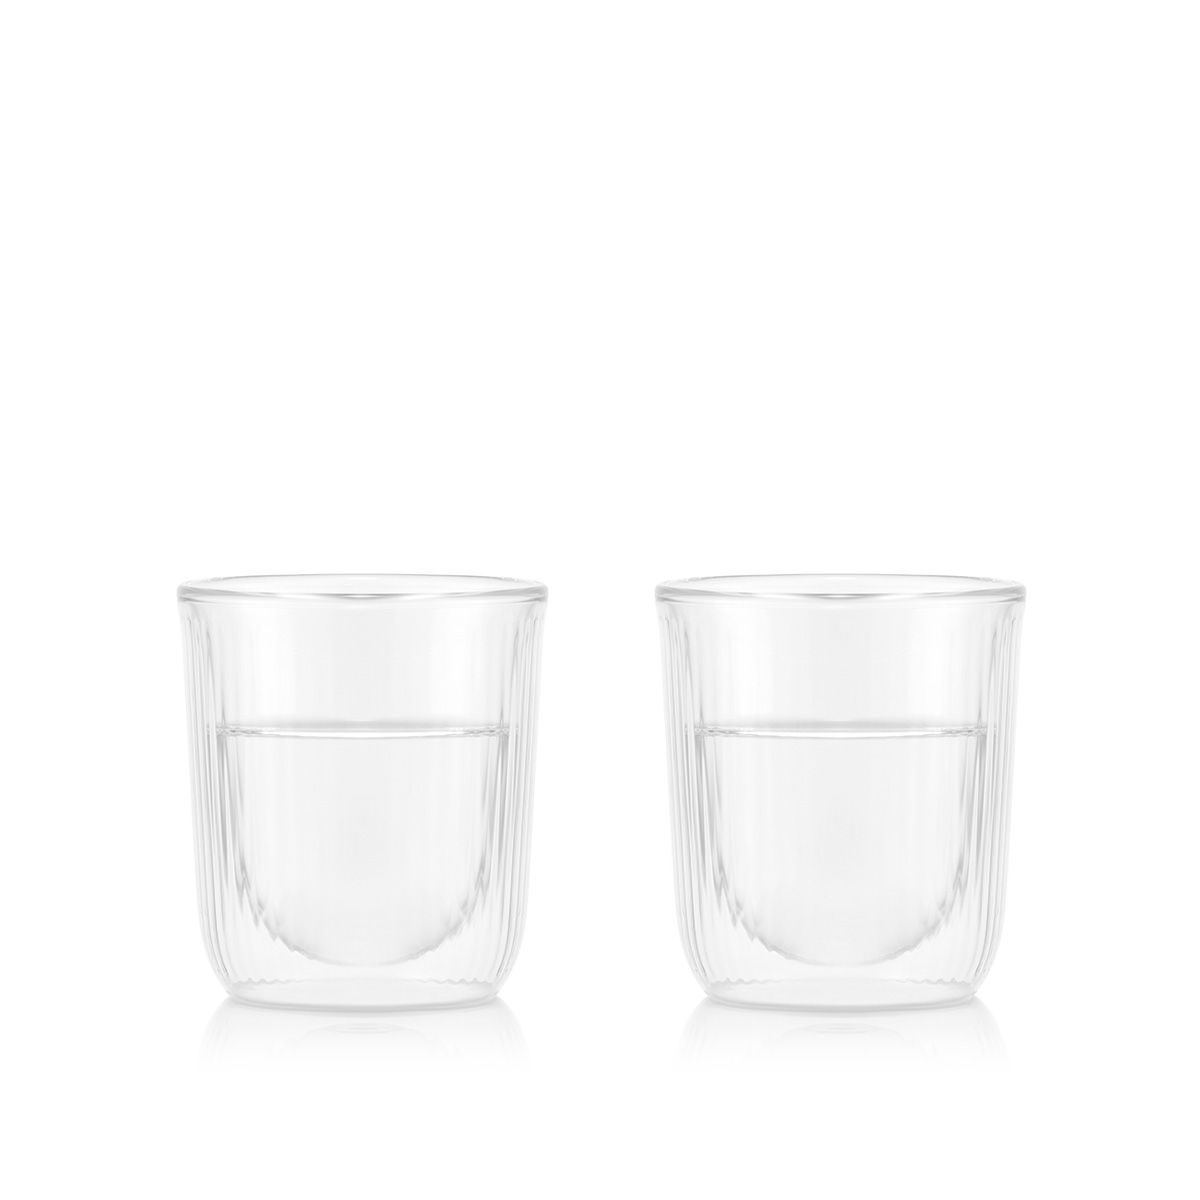 Bodum Douro set con 2 vasos de sake dobles paredes, transparentes